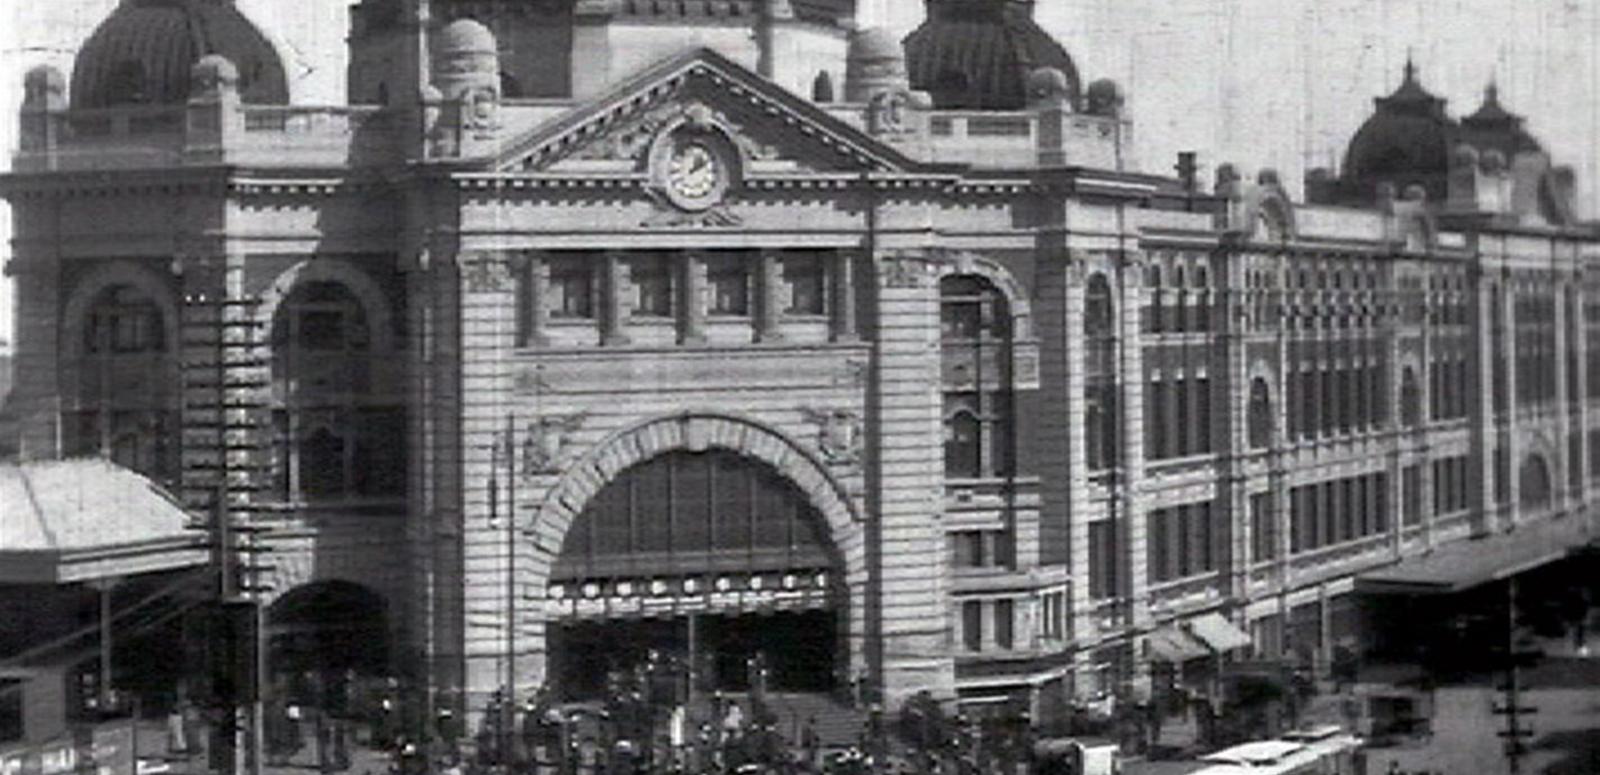 Flinders Street Station circa 1910